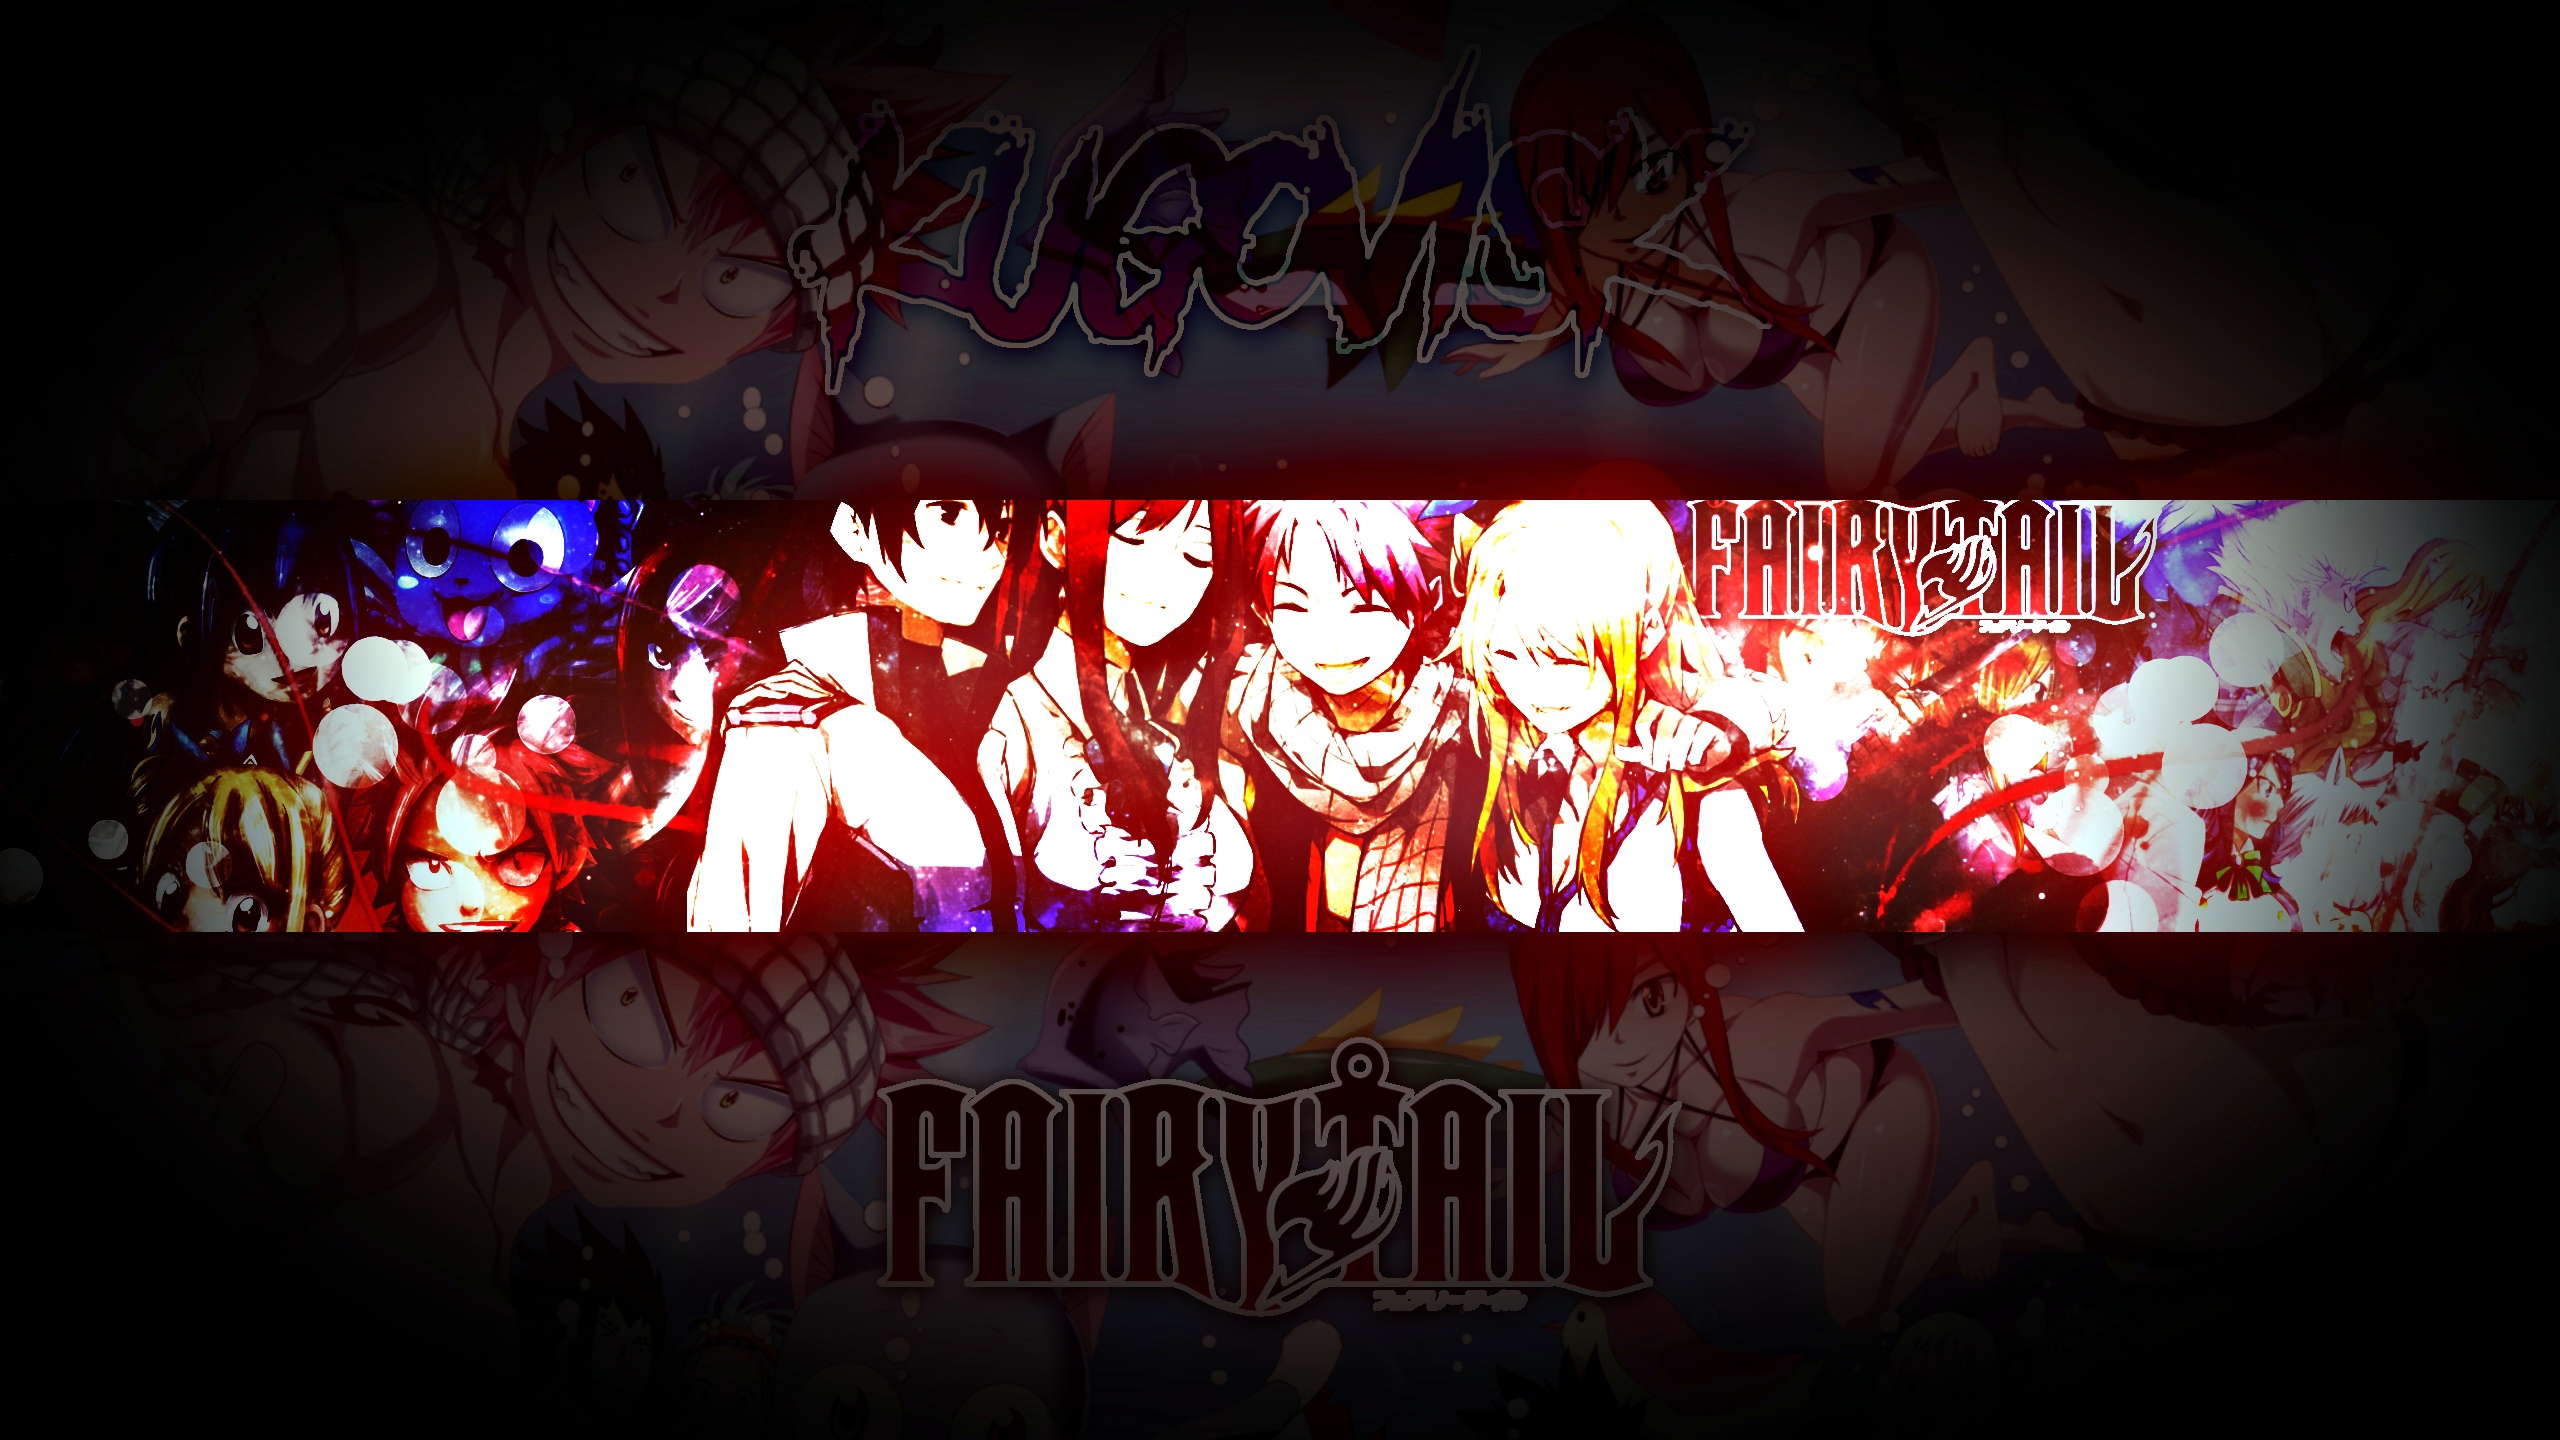 banner para fandub anime by ImanolCisneros on DeviantArt